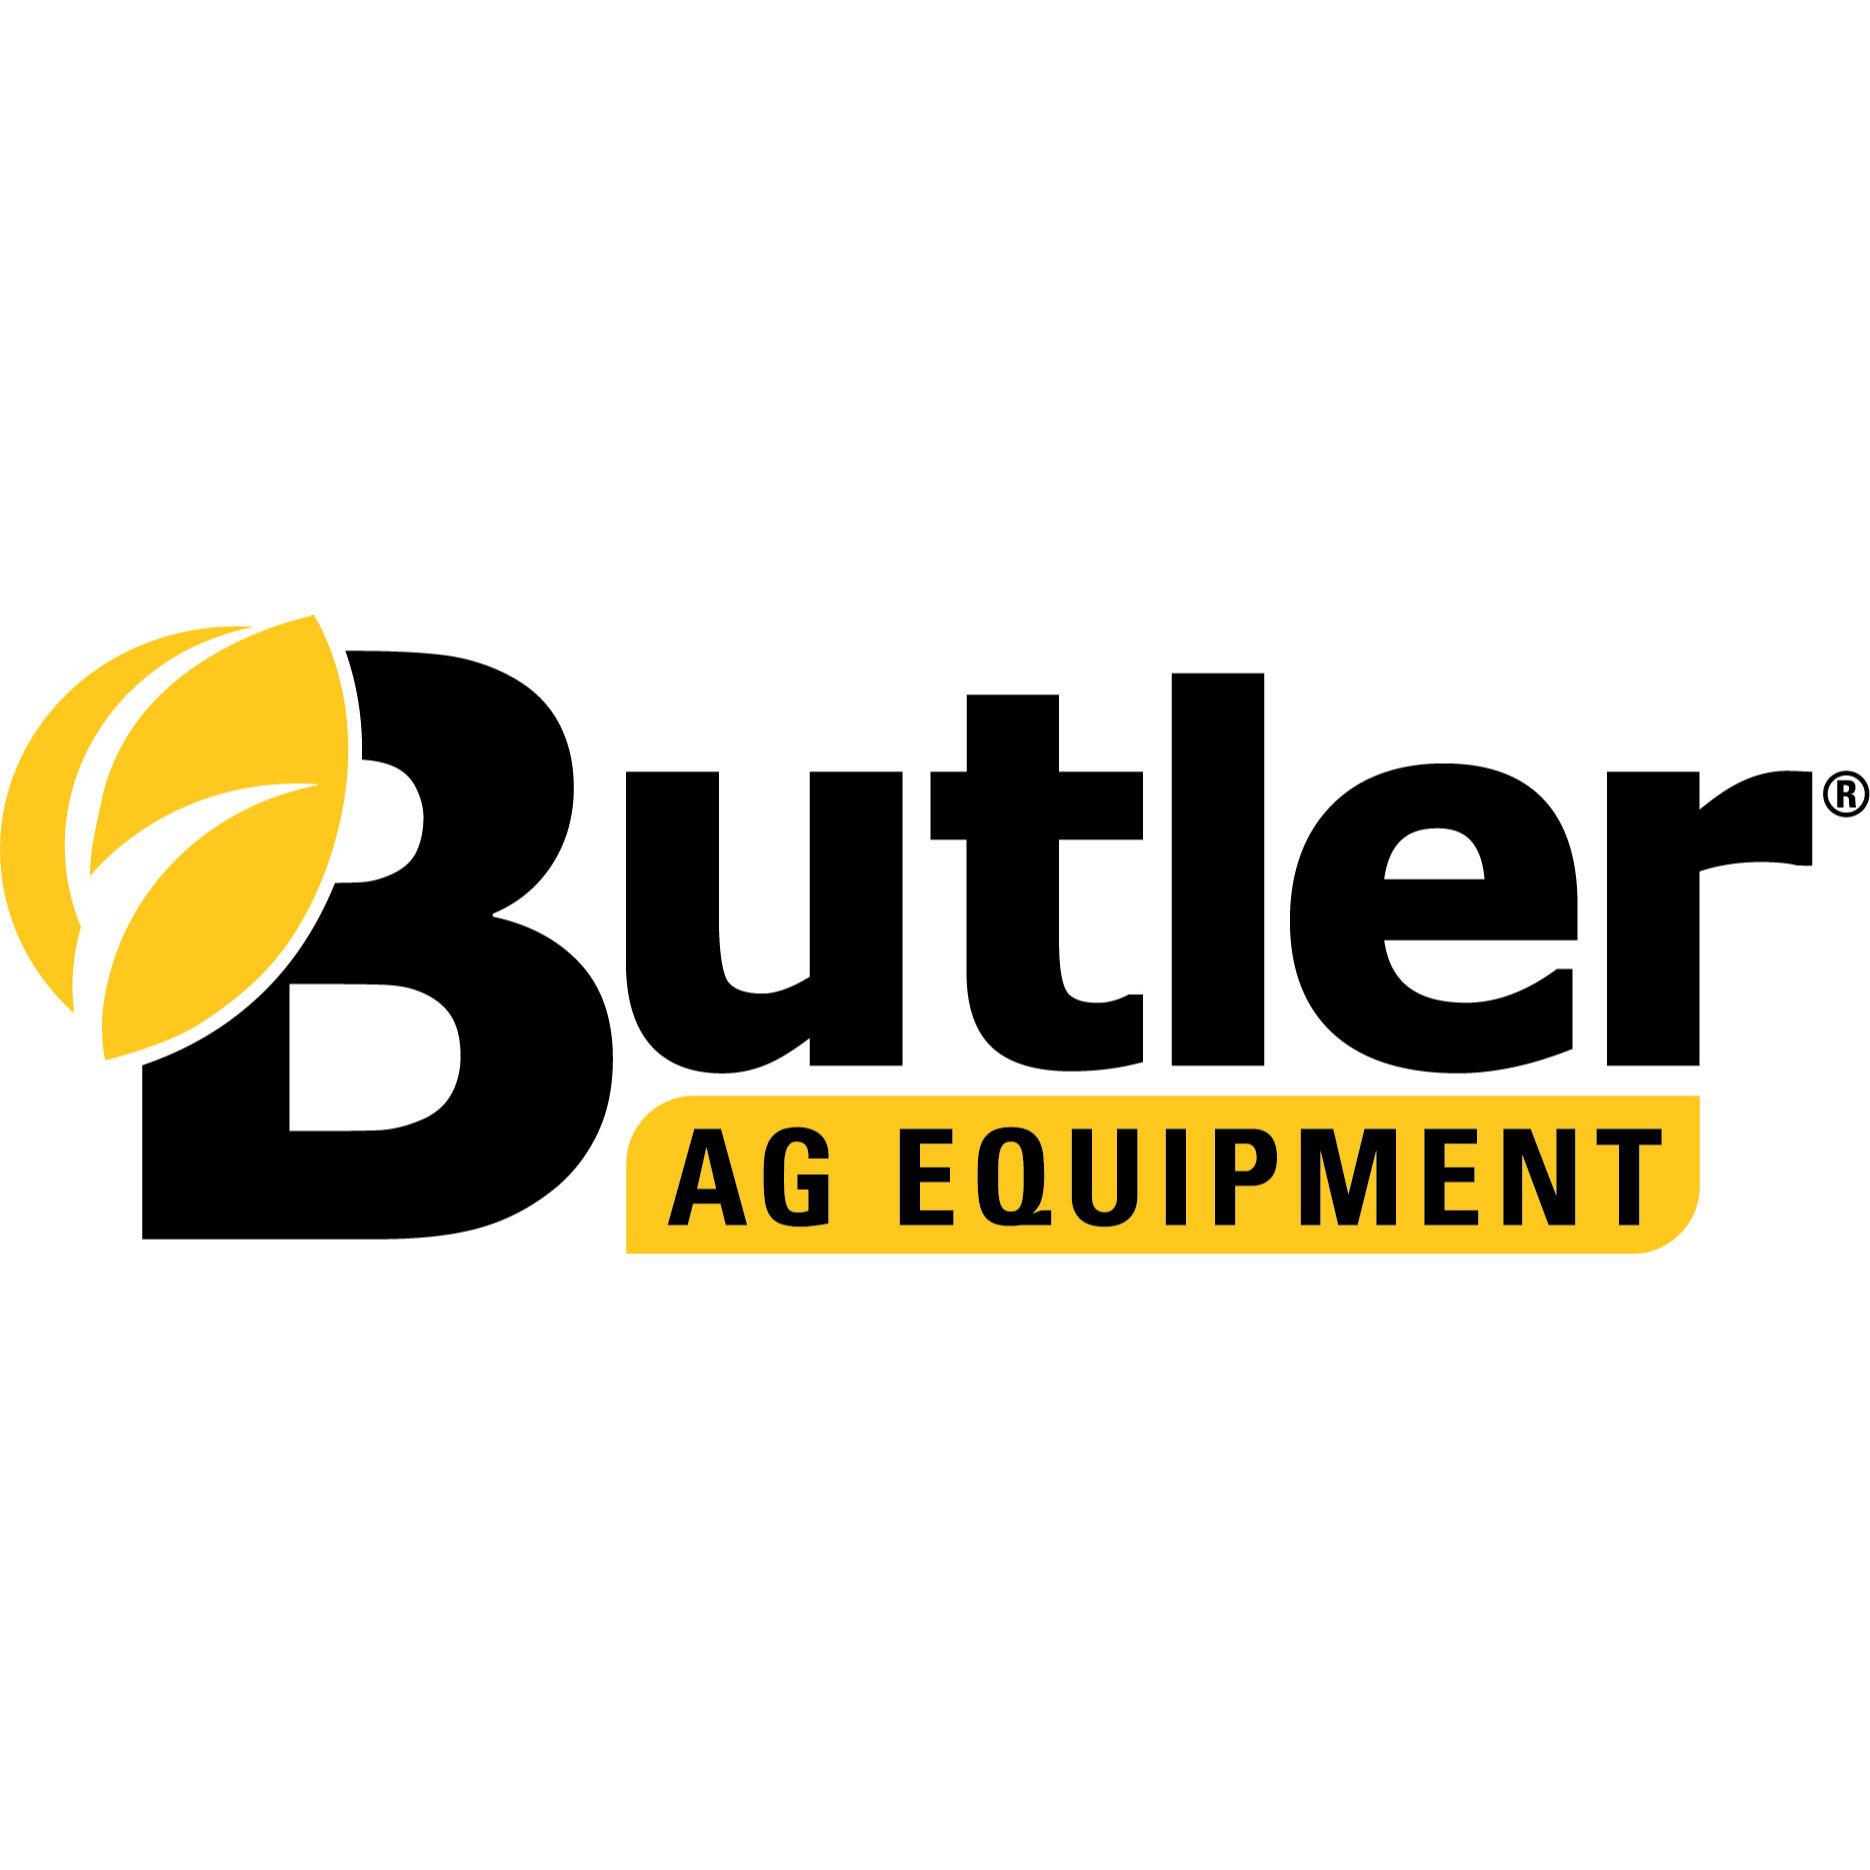 Butler Ag Equipment - Sidney, MT 59270 - (406)742-7700 | ShowMeLocal.com